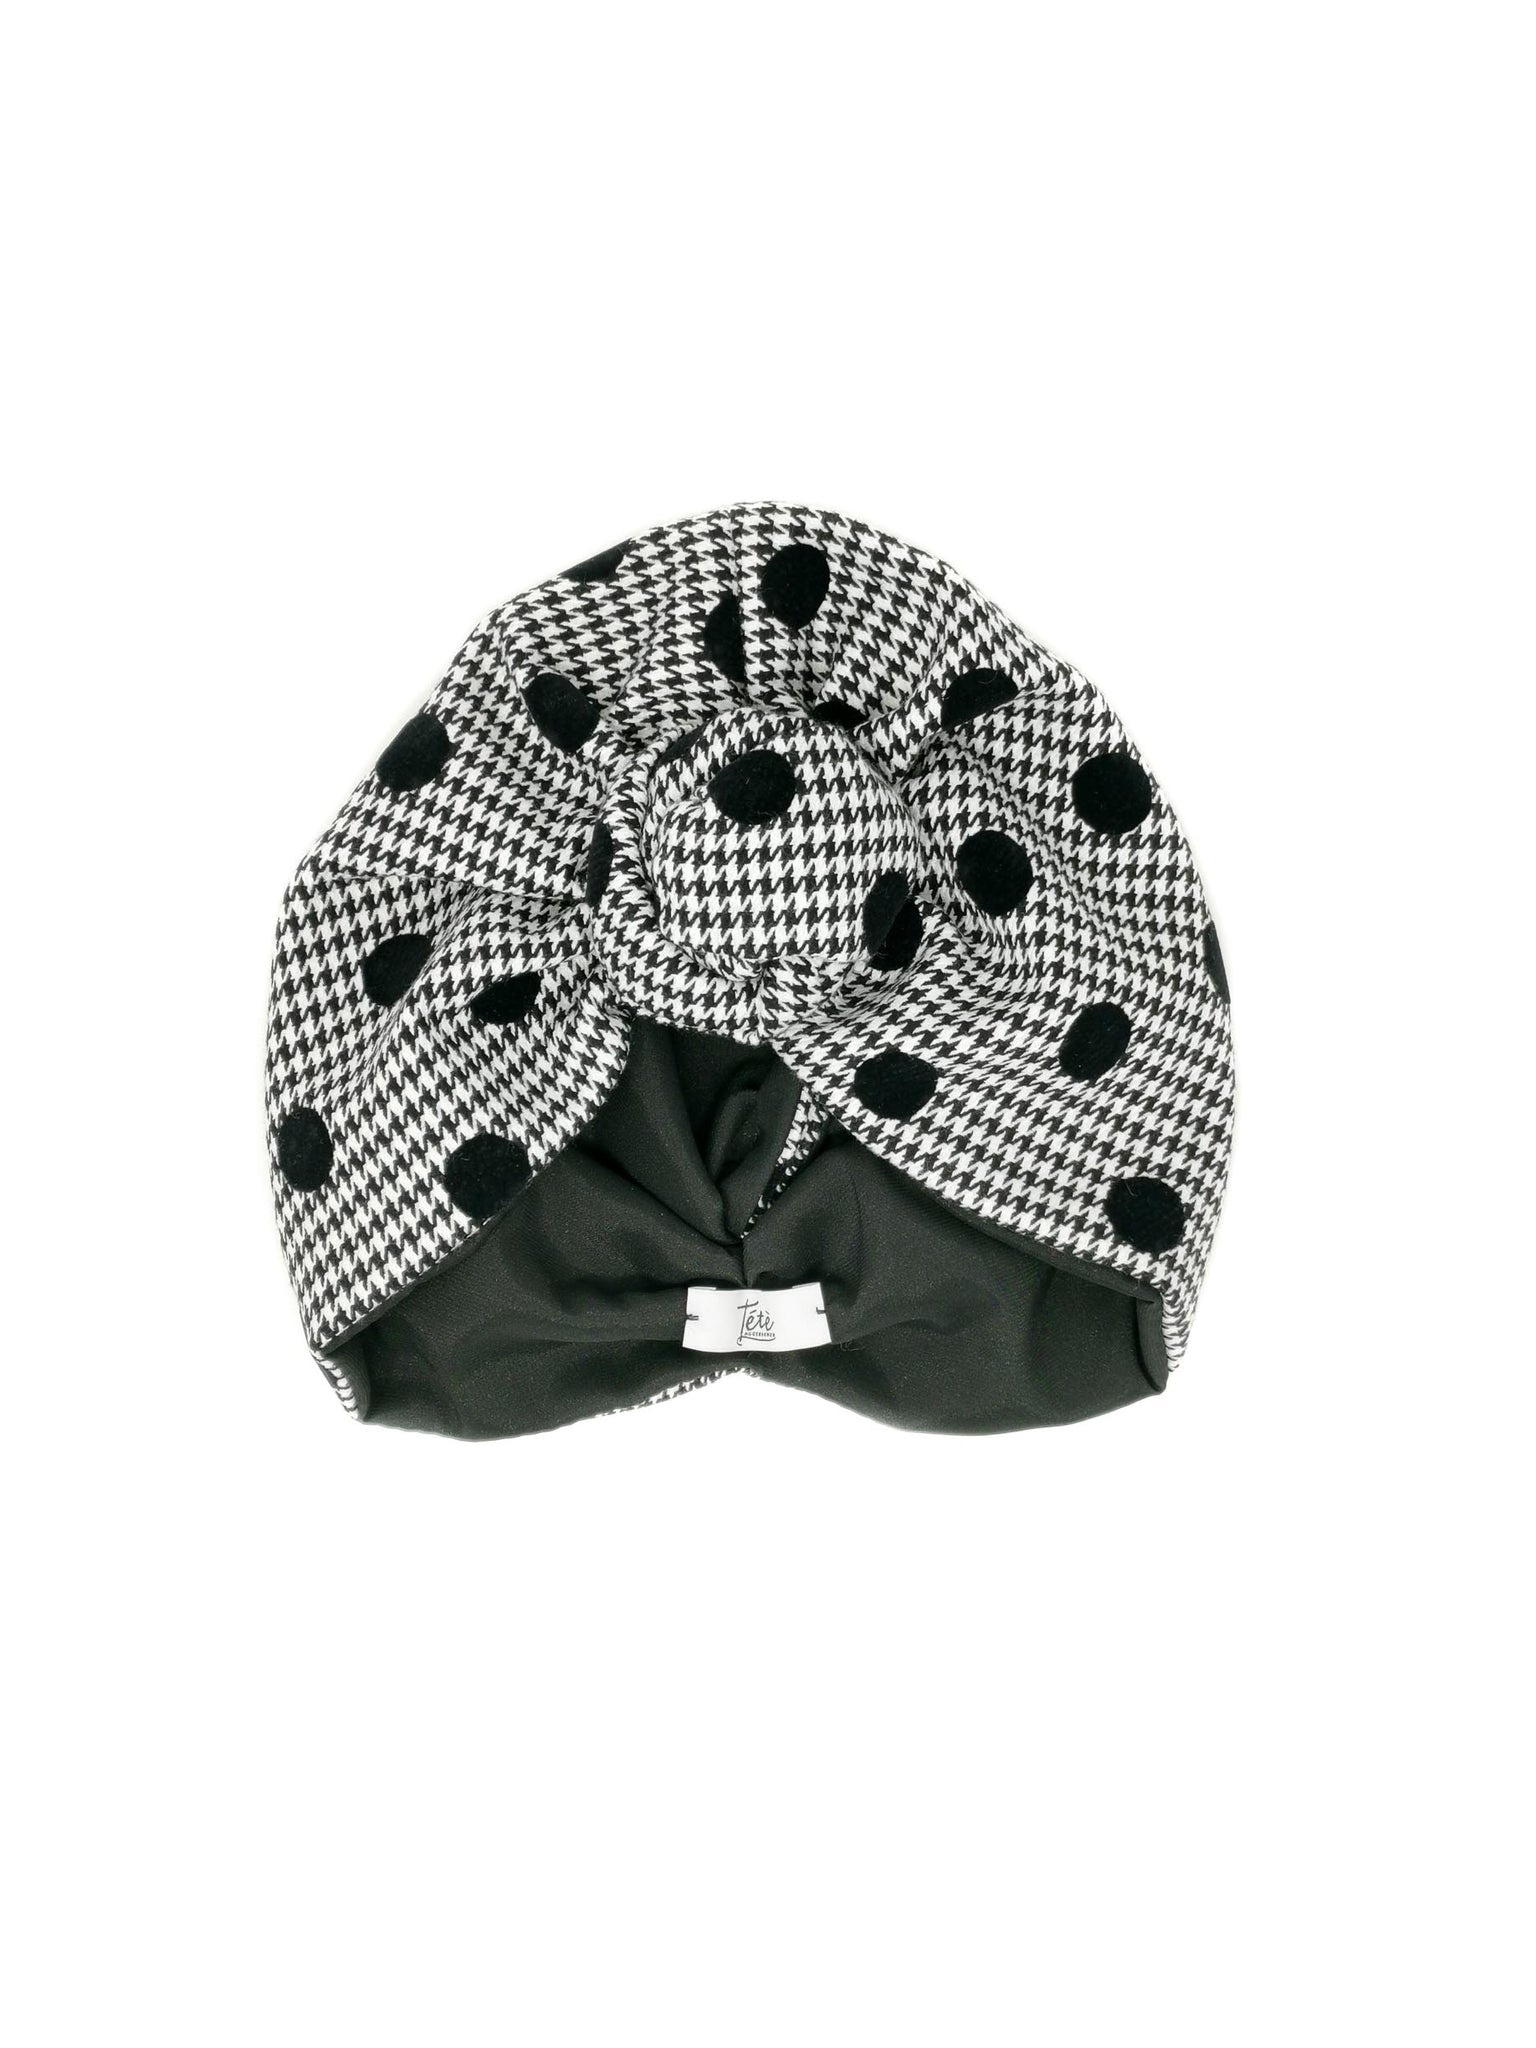 "Rachel" turban in houndstooth wool and black polka dots